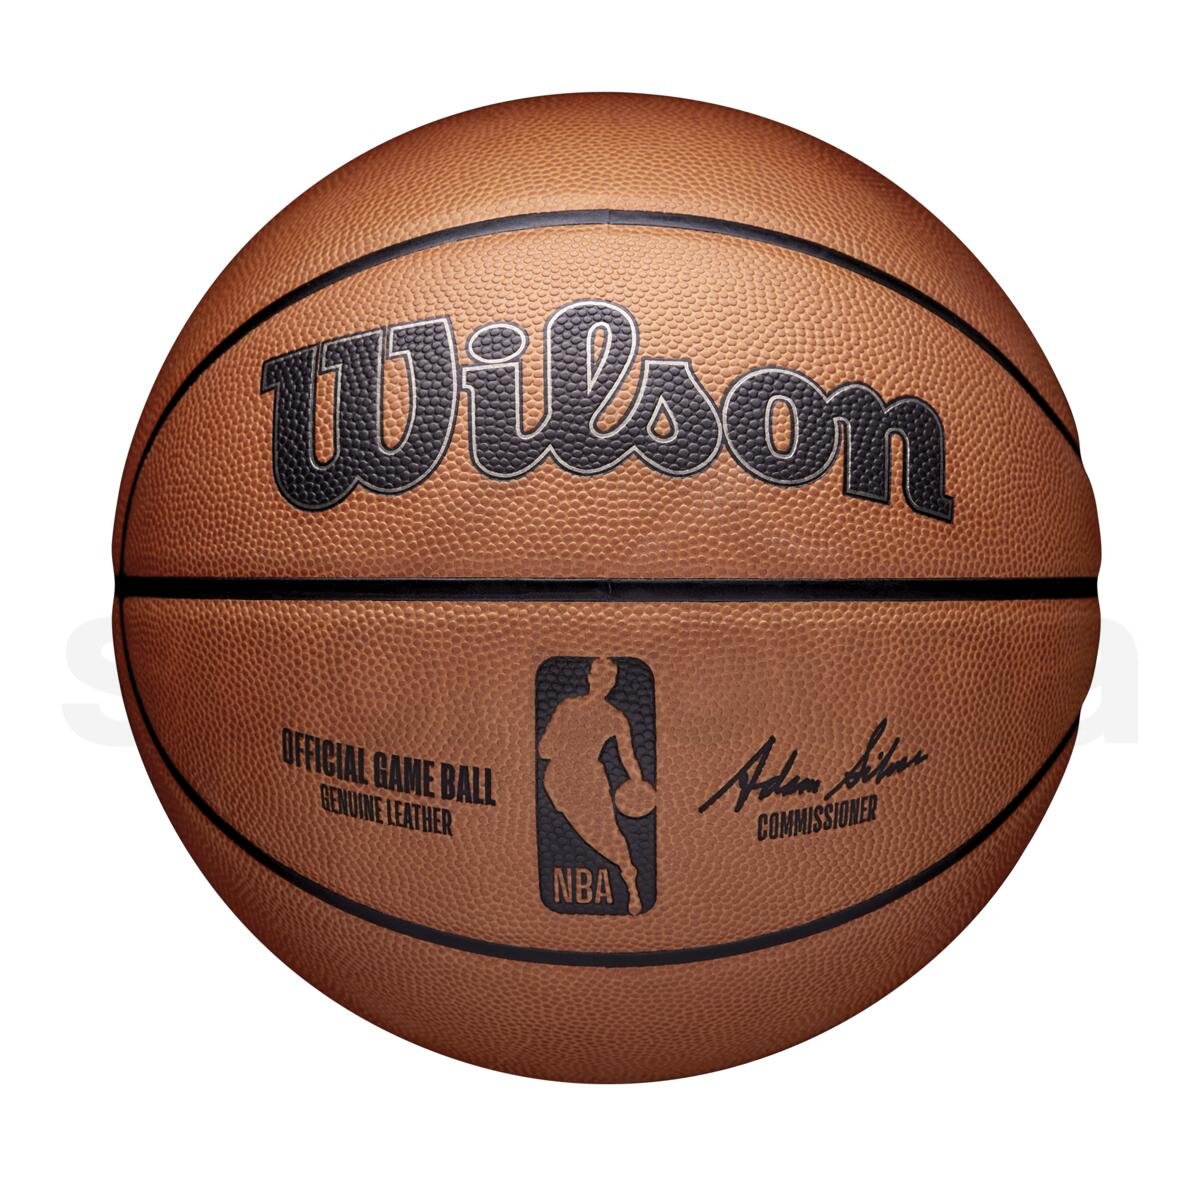 Míč Wilson basketbalový NBA Official Game Ball Basket Retail - oranžová